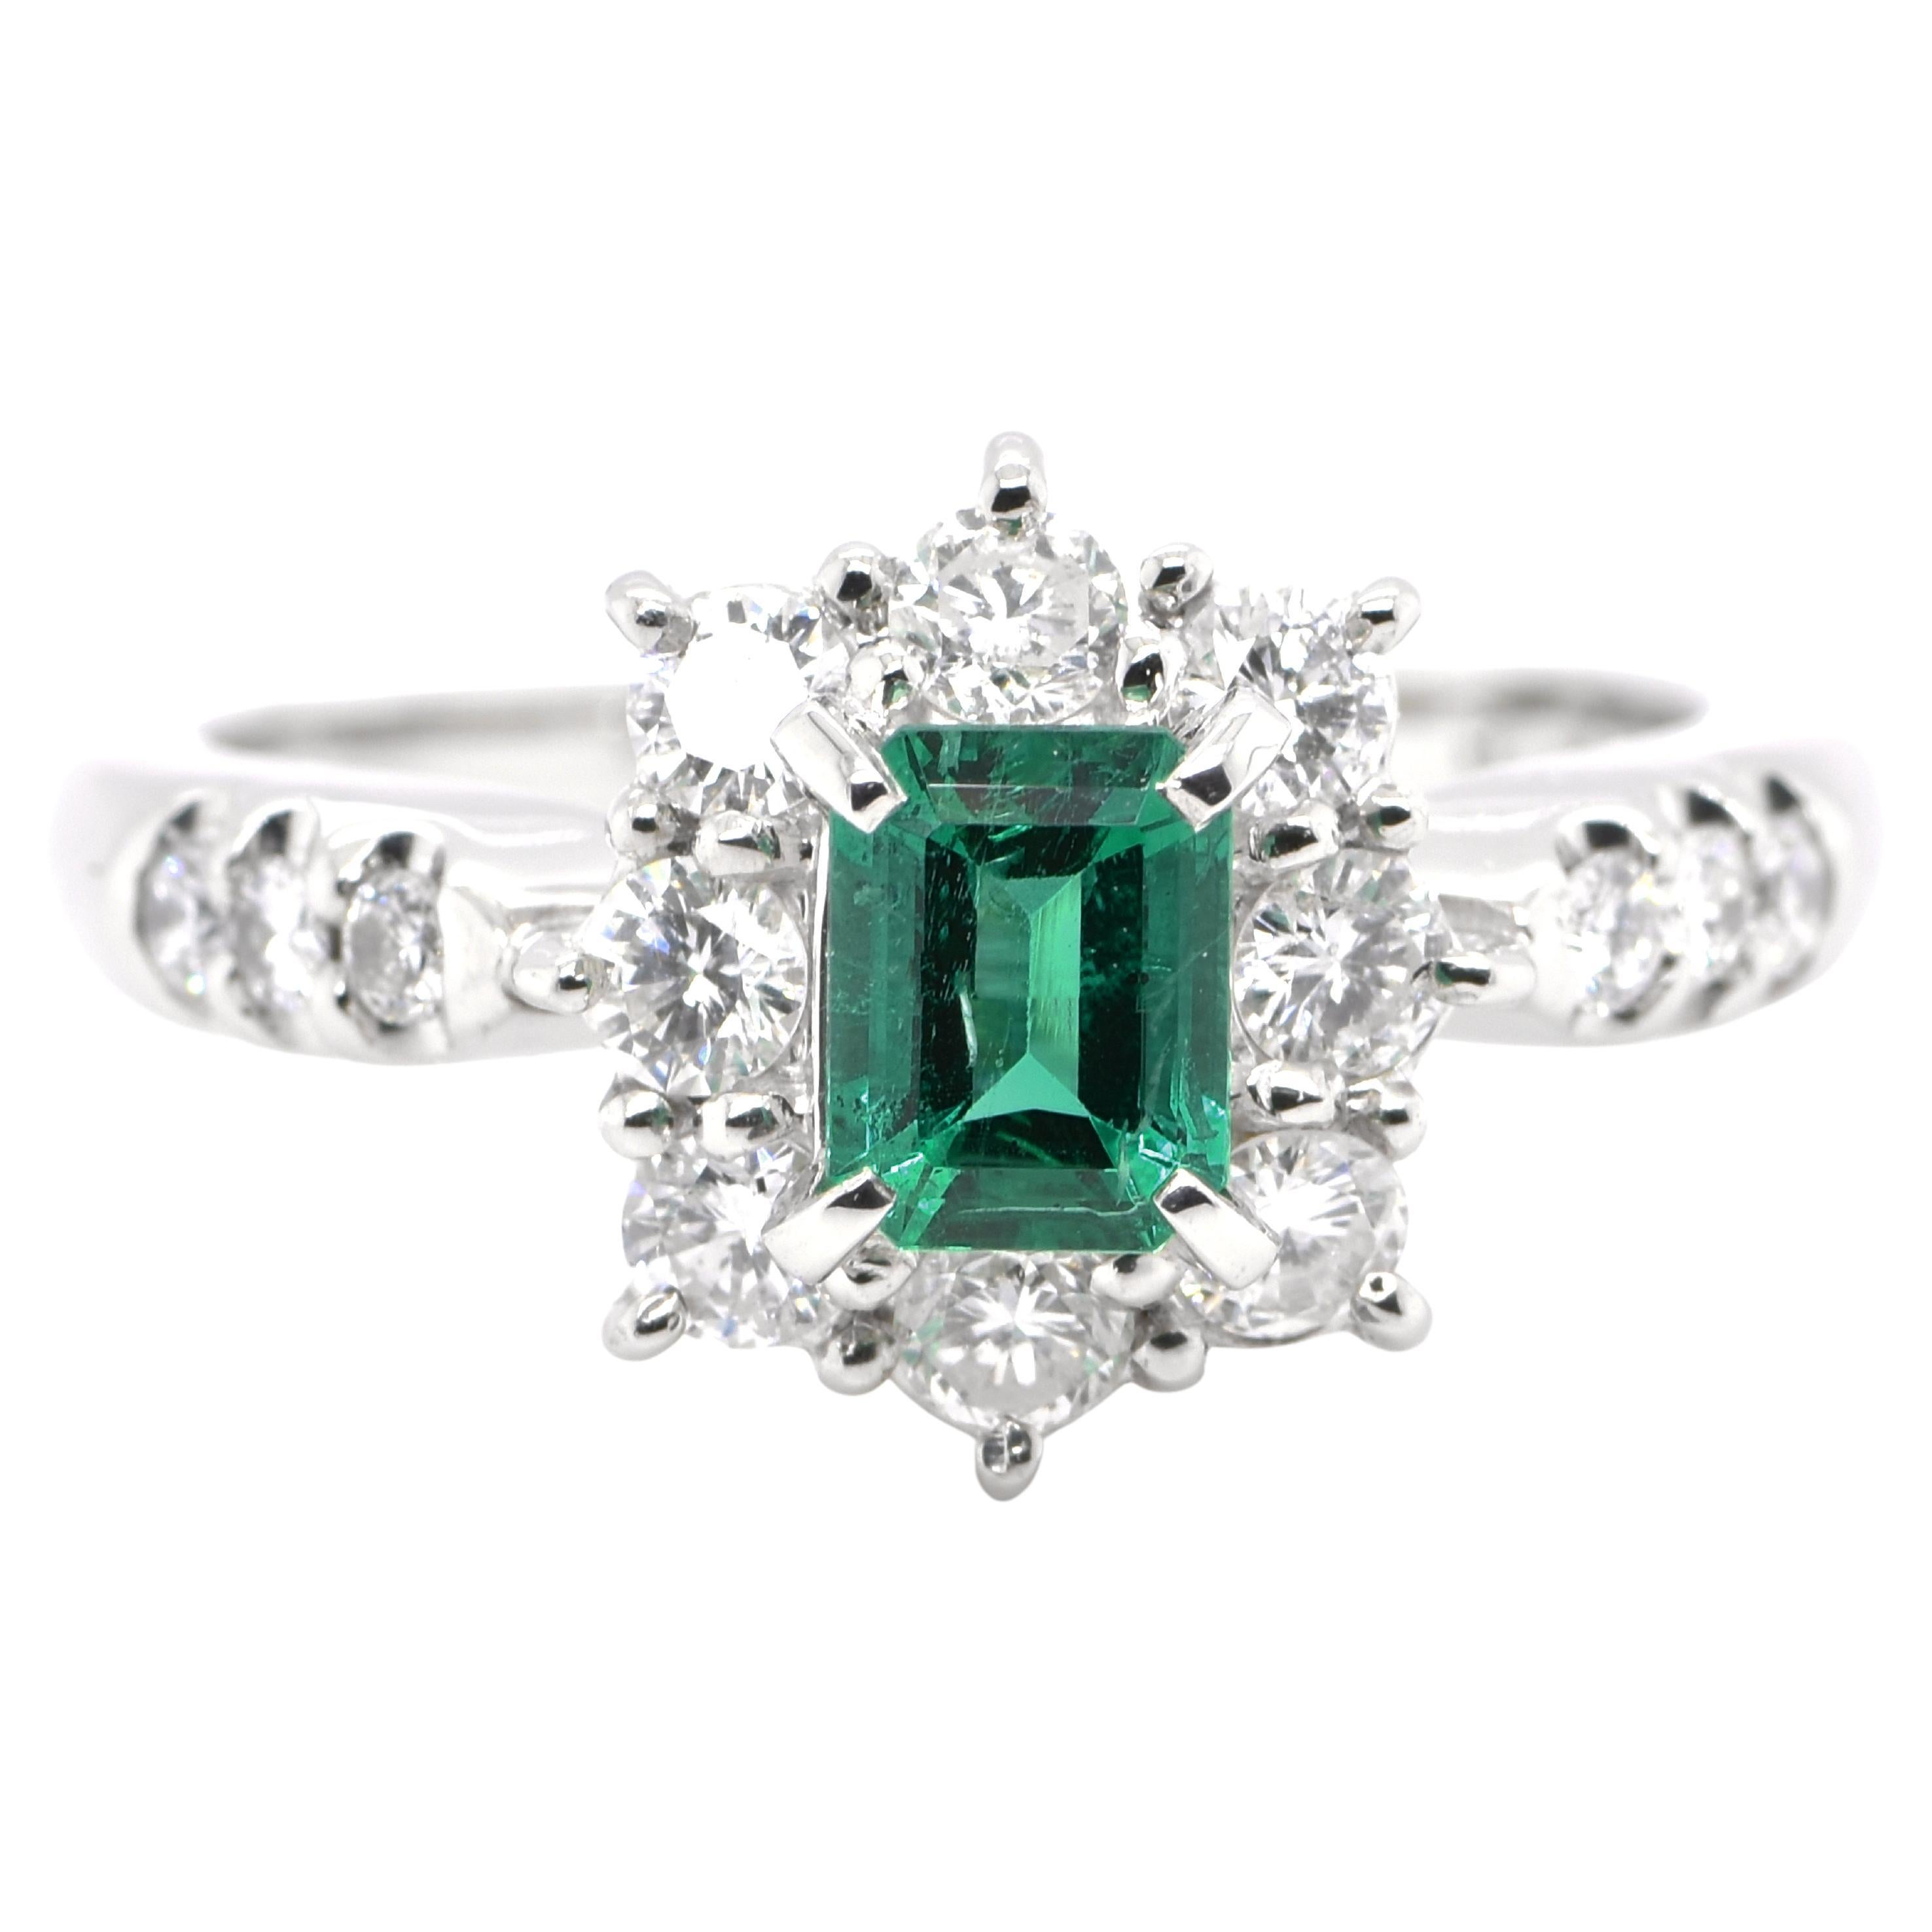 0.61 Carat Natural Emerald and Diamond Ring Set in Platinum